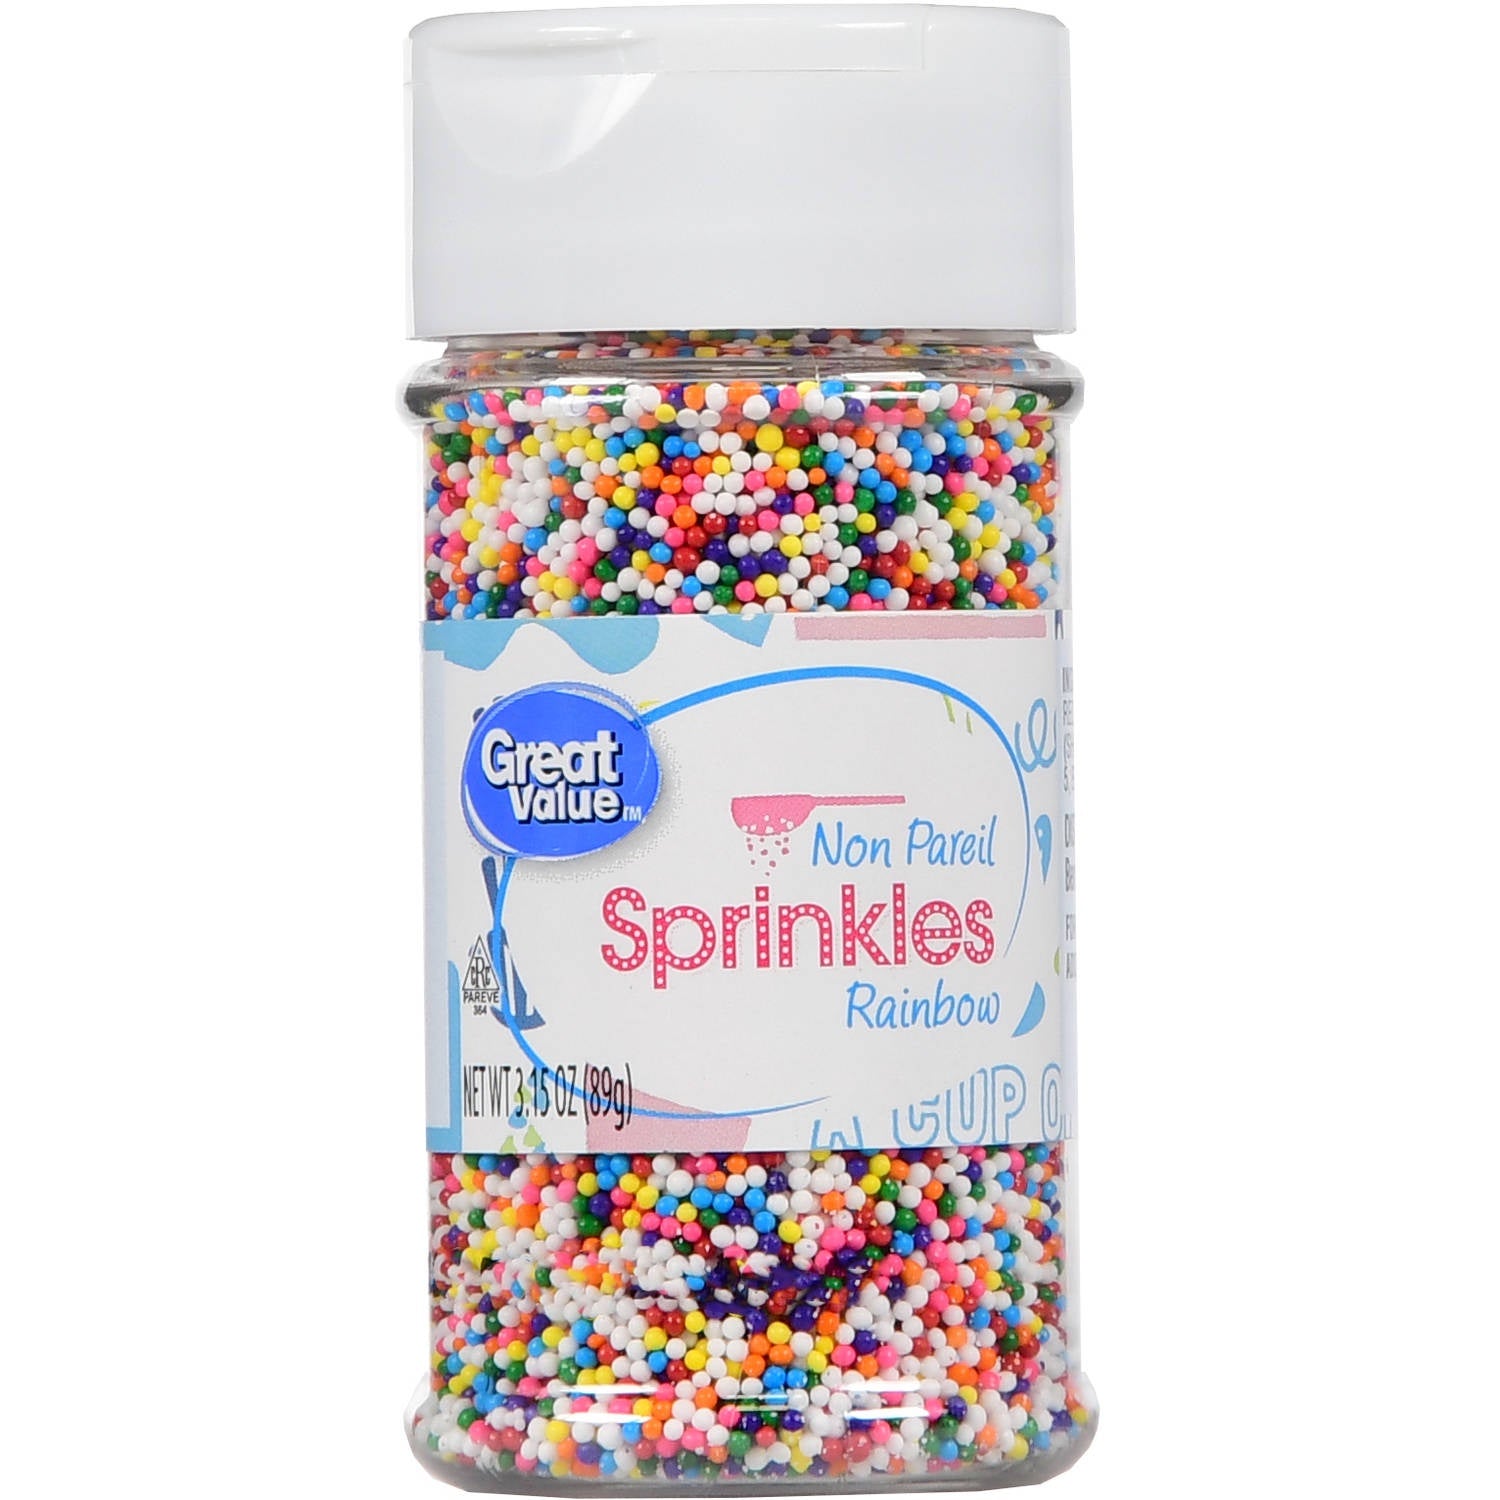 Great Value Non Pareil Rainbow Sprinkles